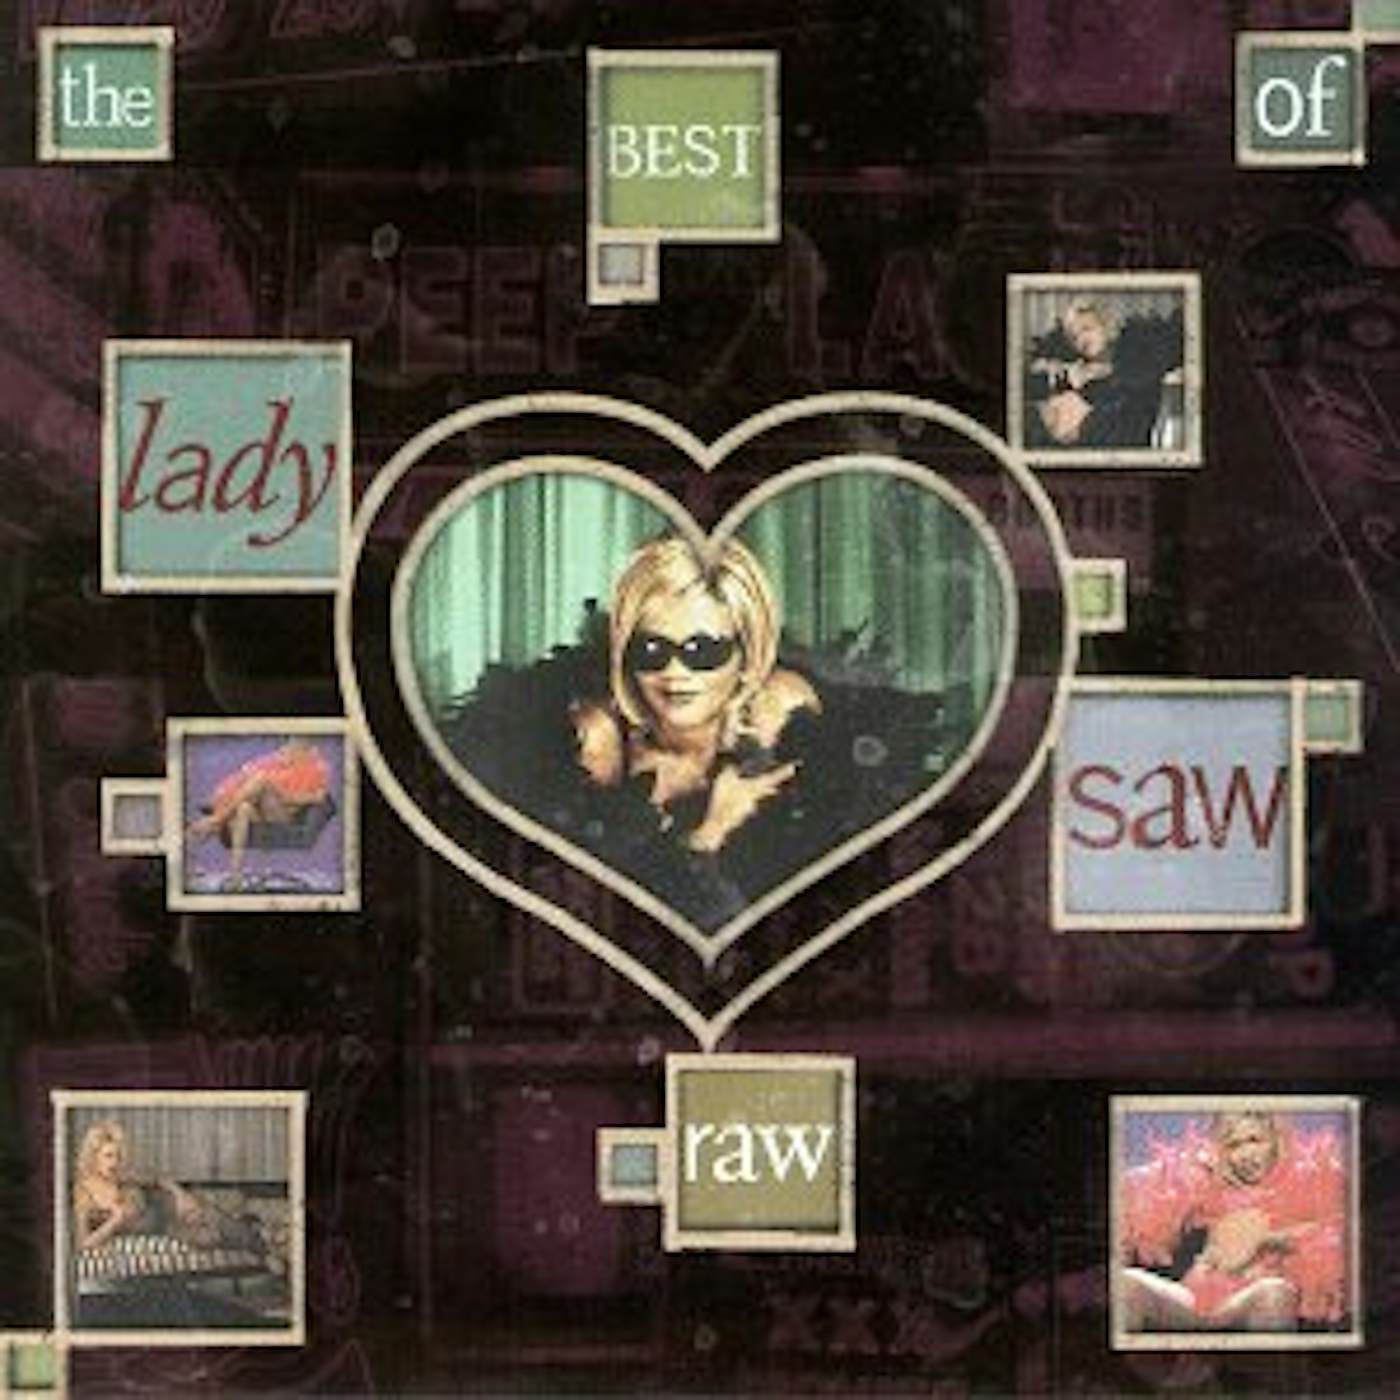 Lady Saw RAW: BEST OF Vinyl Record